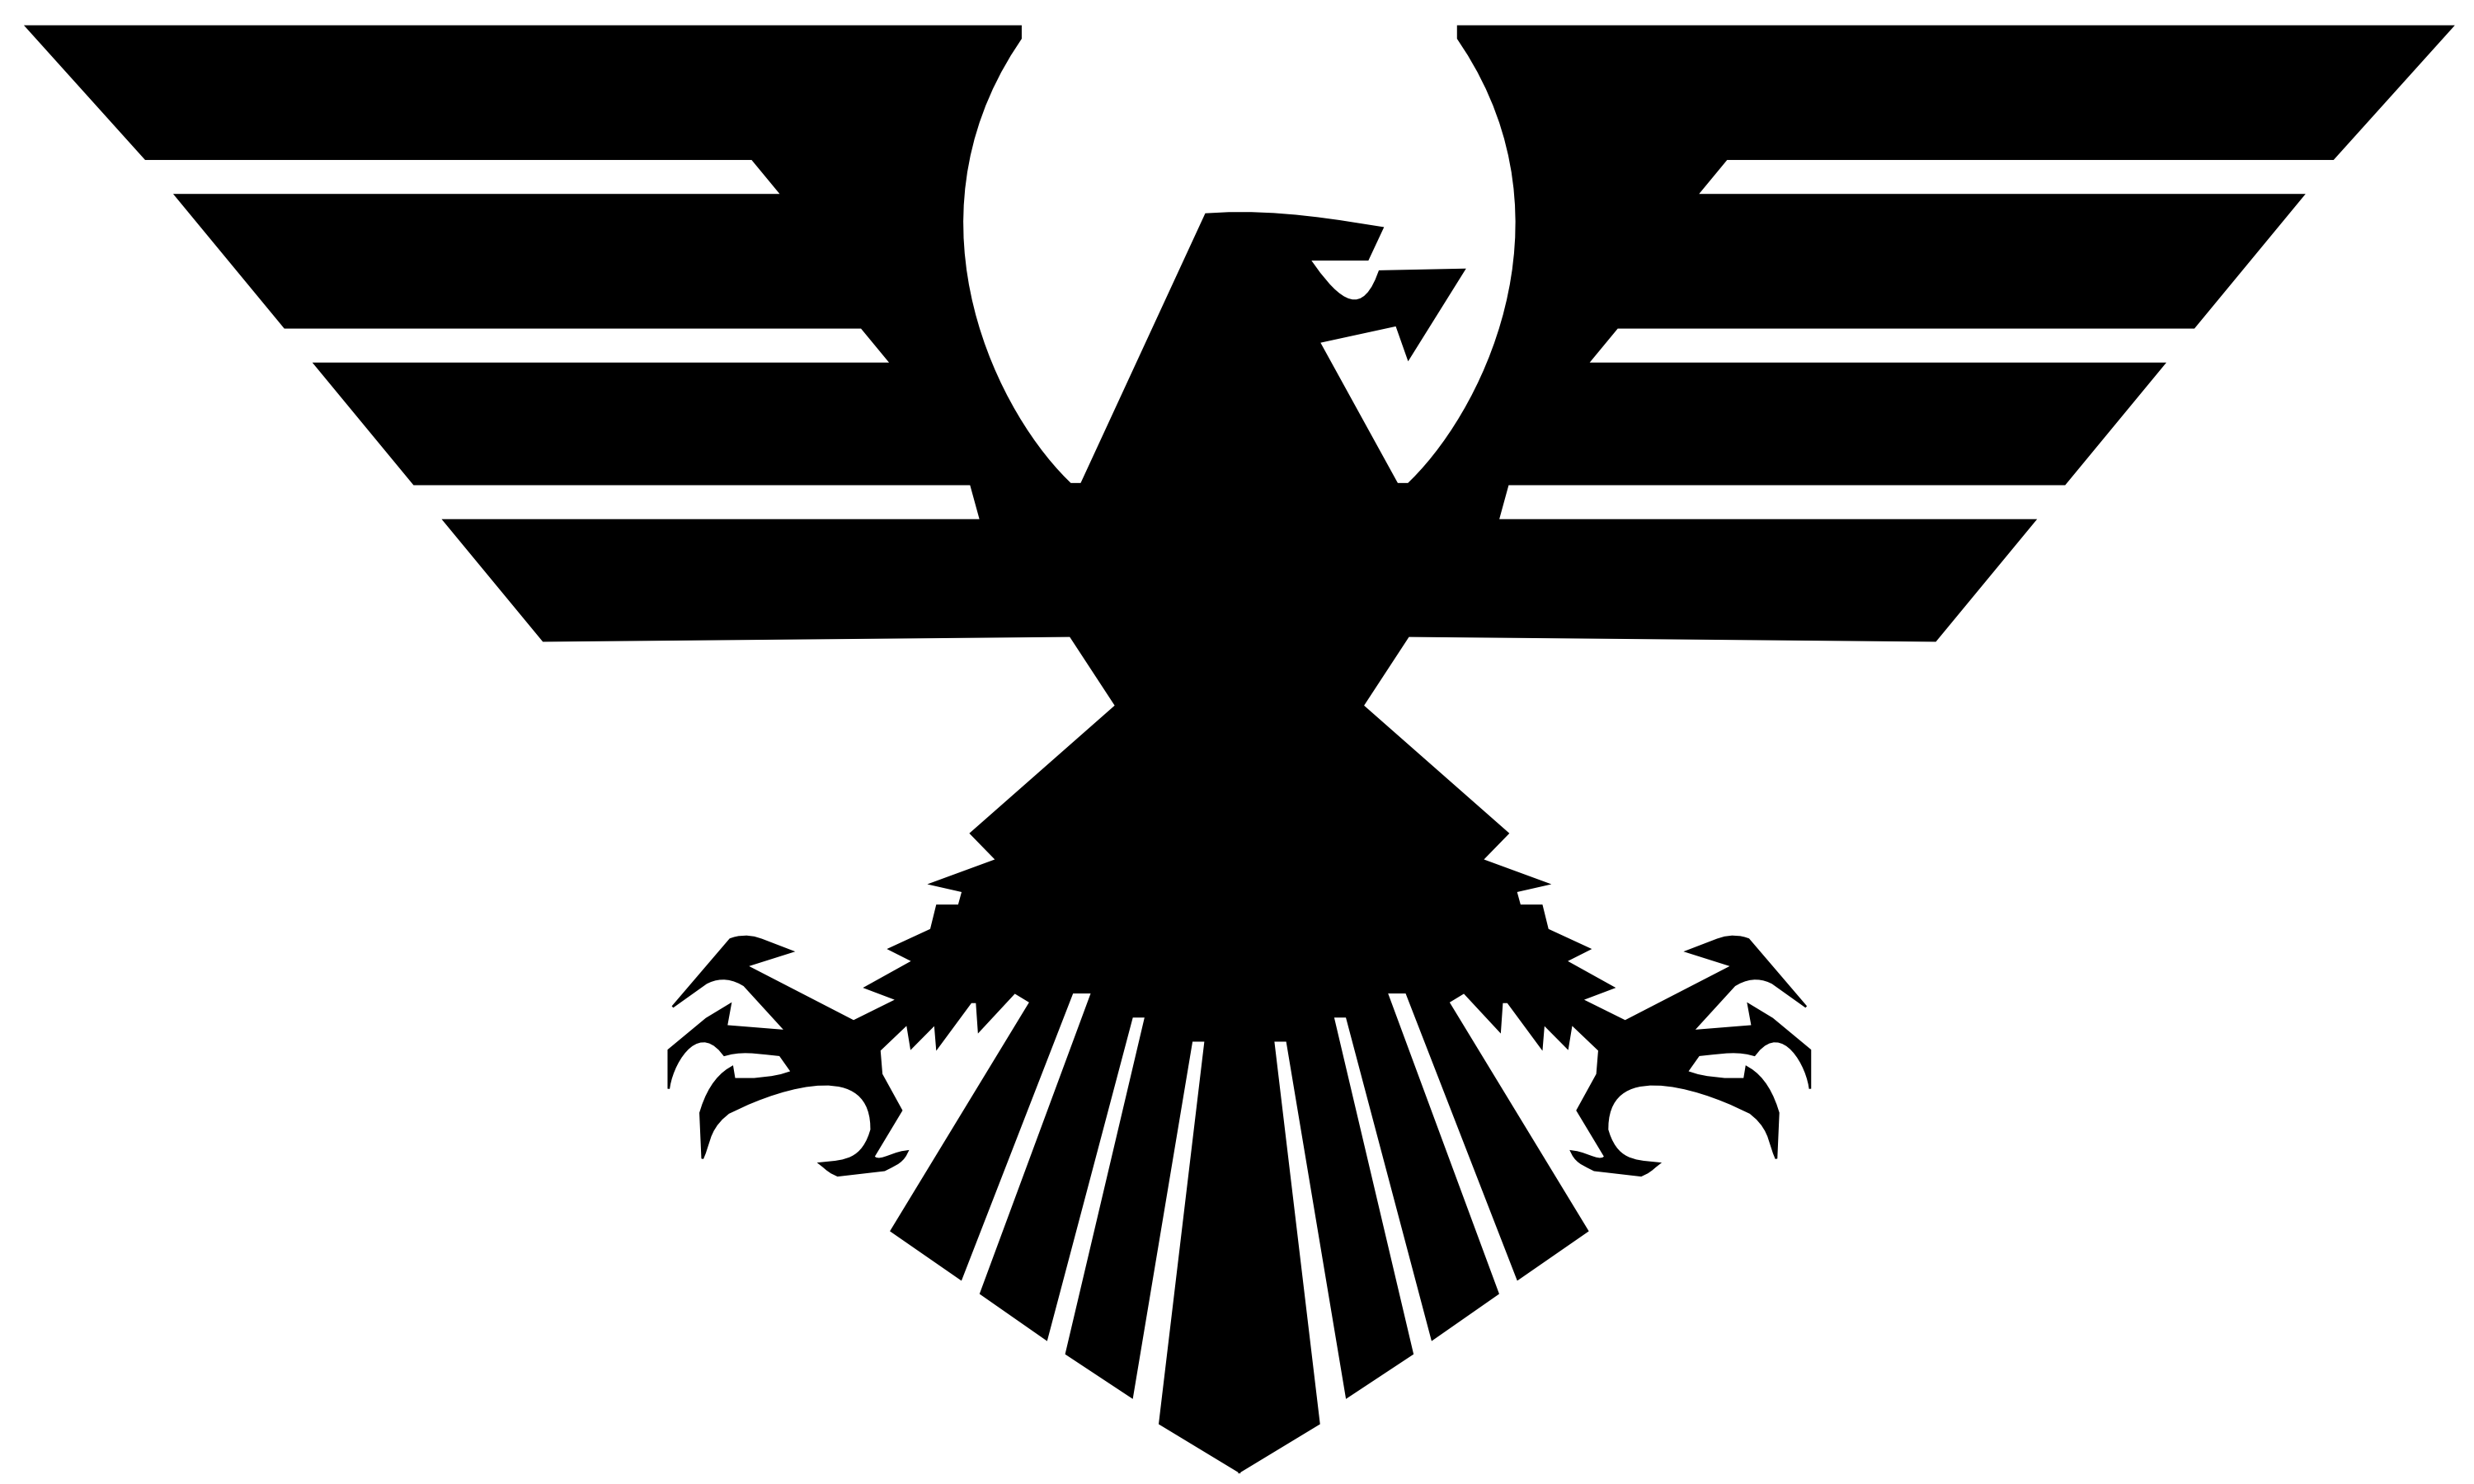 Free Eagle Logo Design Black And White, Download Free Eagle Logo Design ...